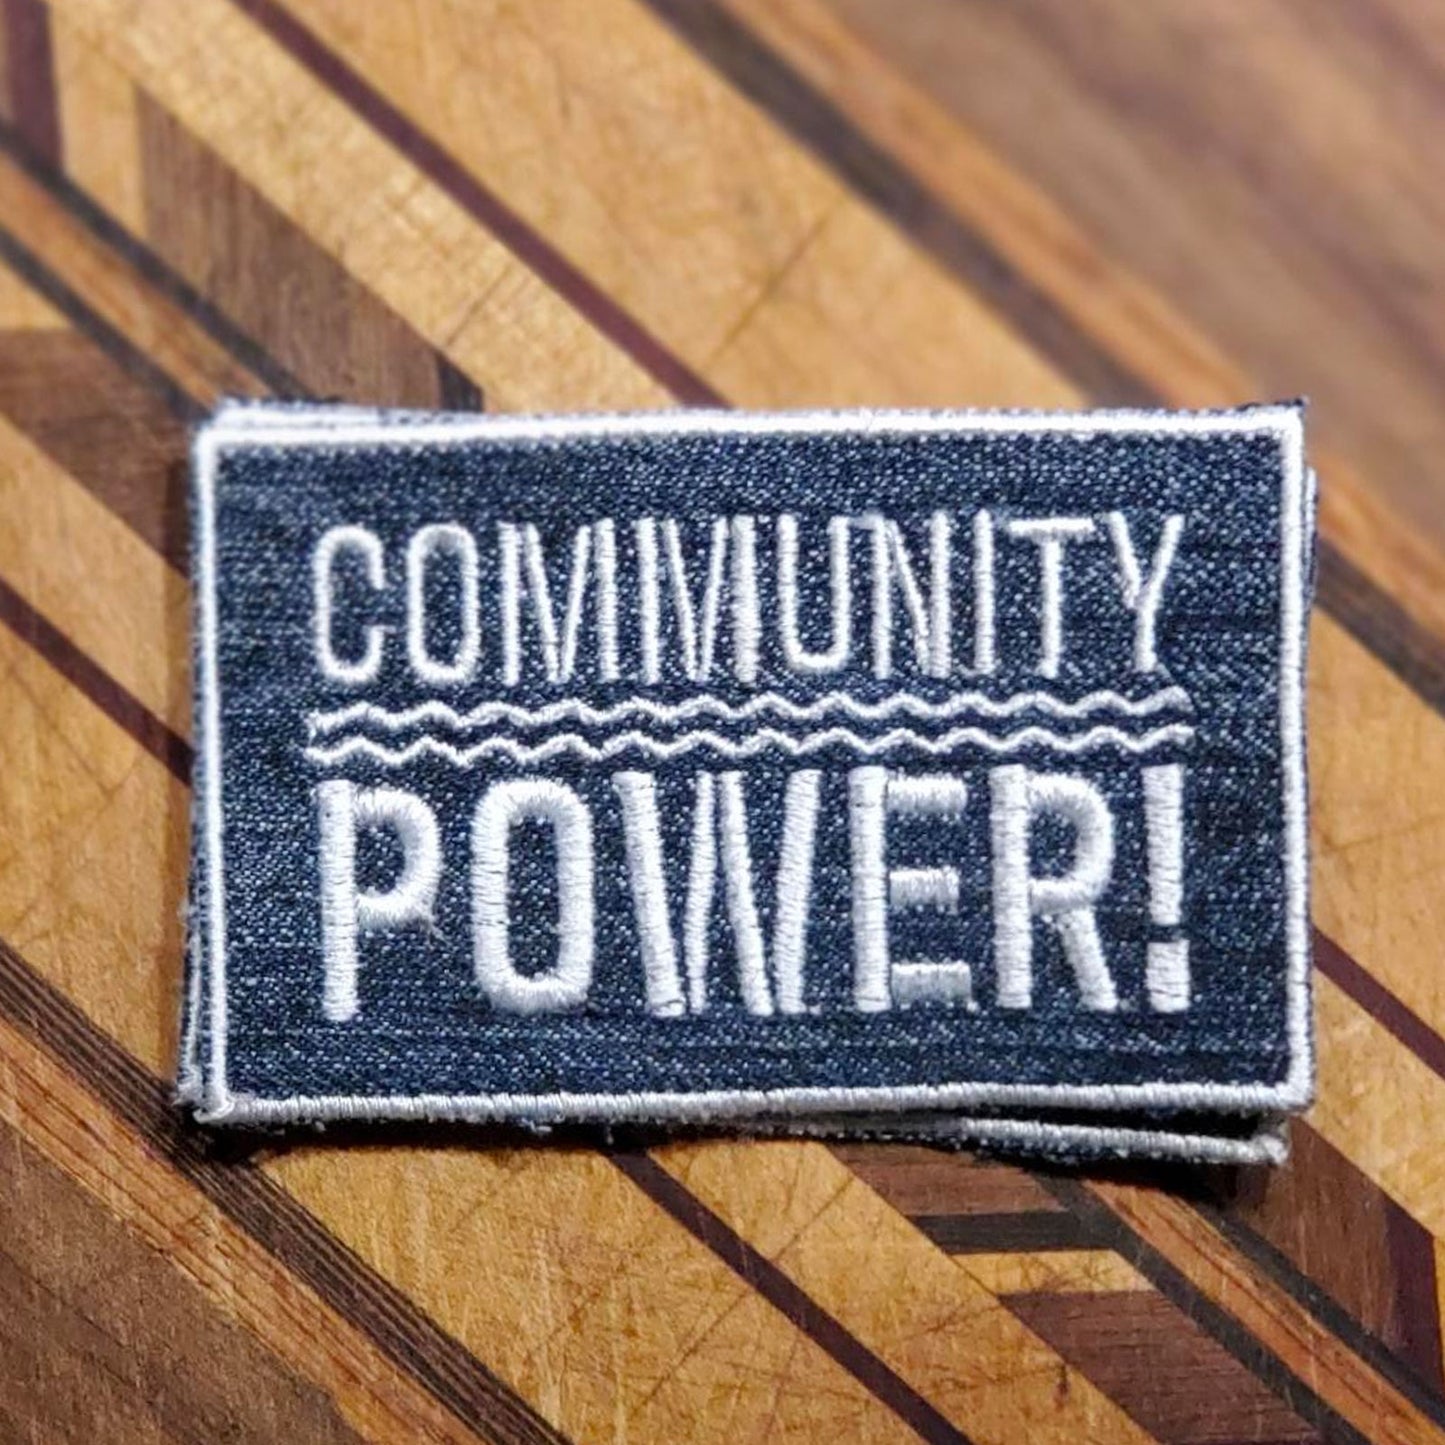 Community Power Patch